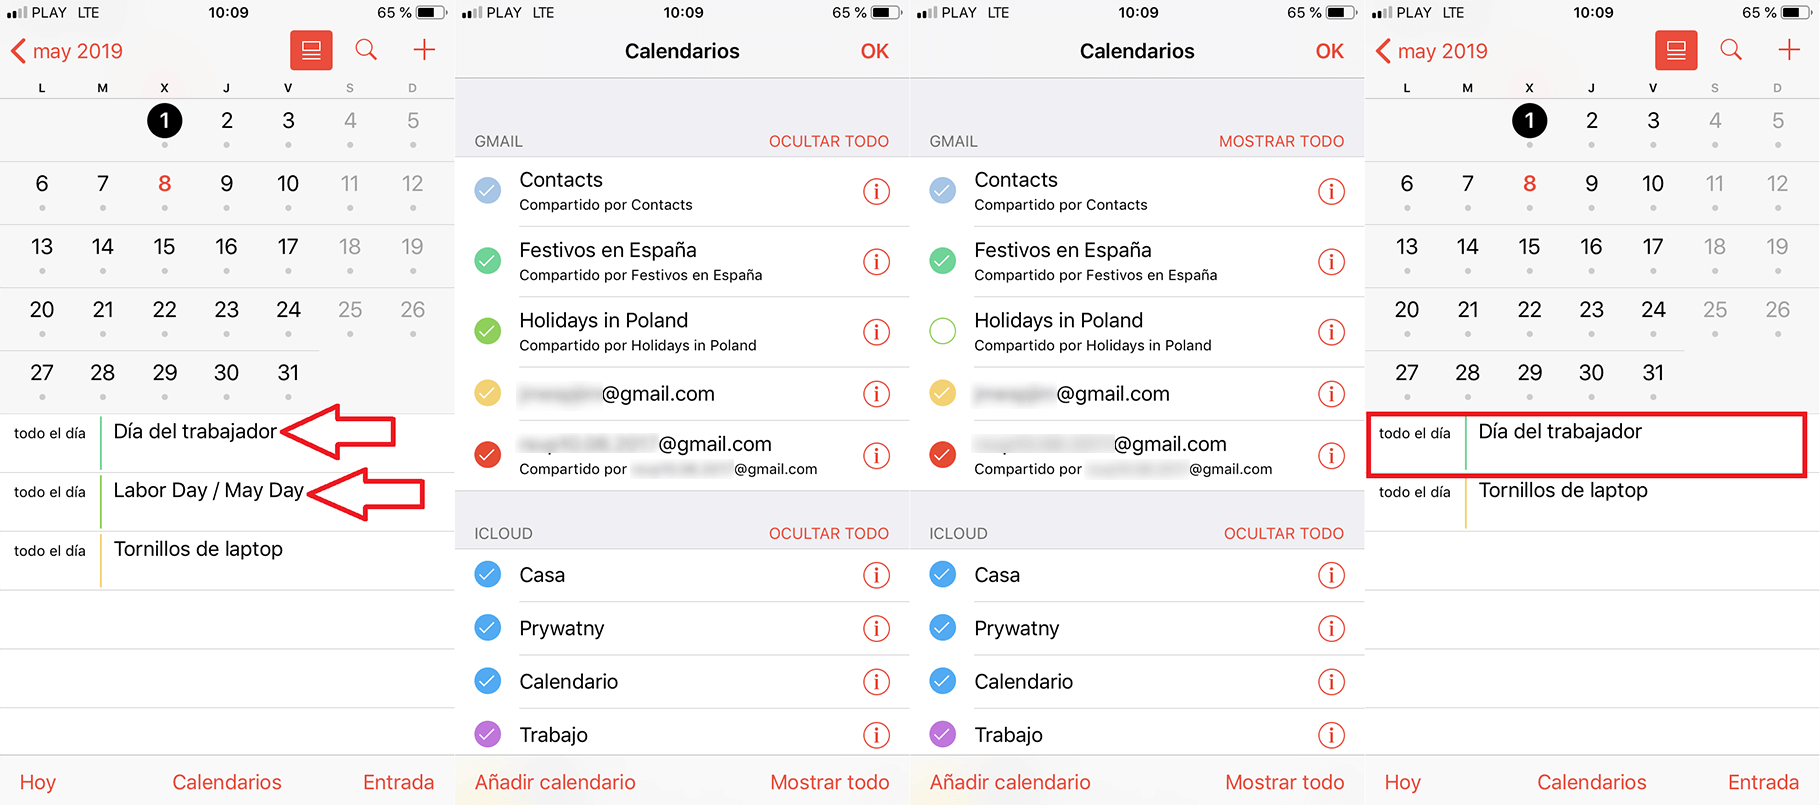 disable calendar in the iPhone Calendars app with iOS